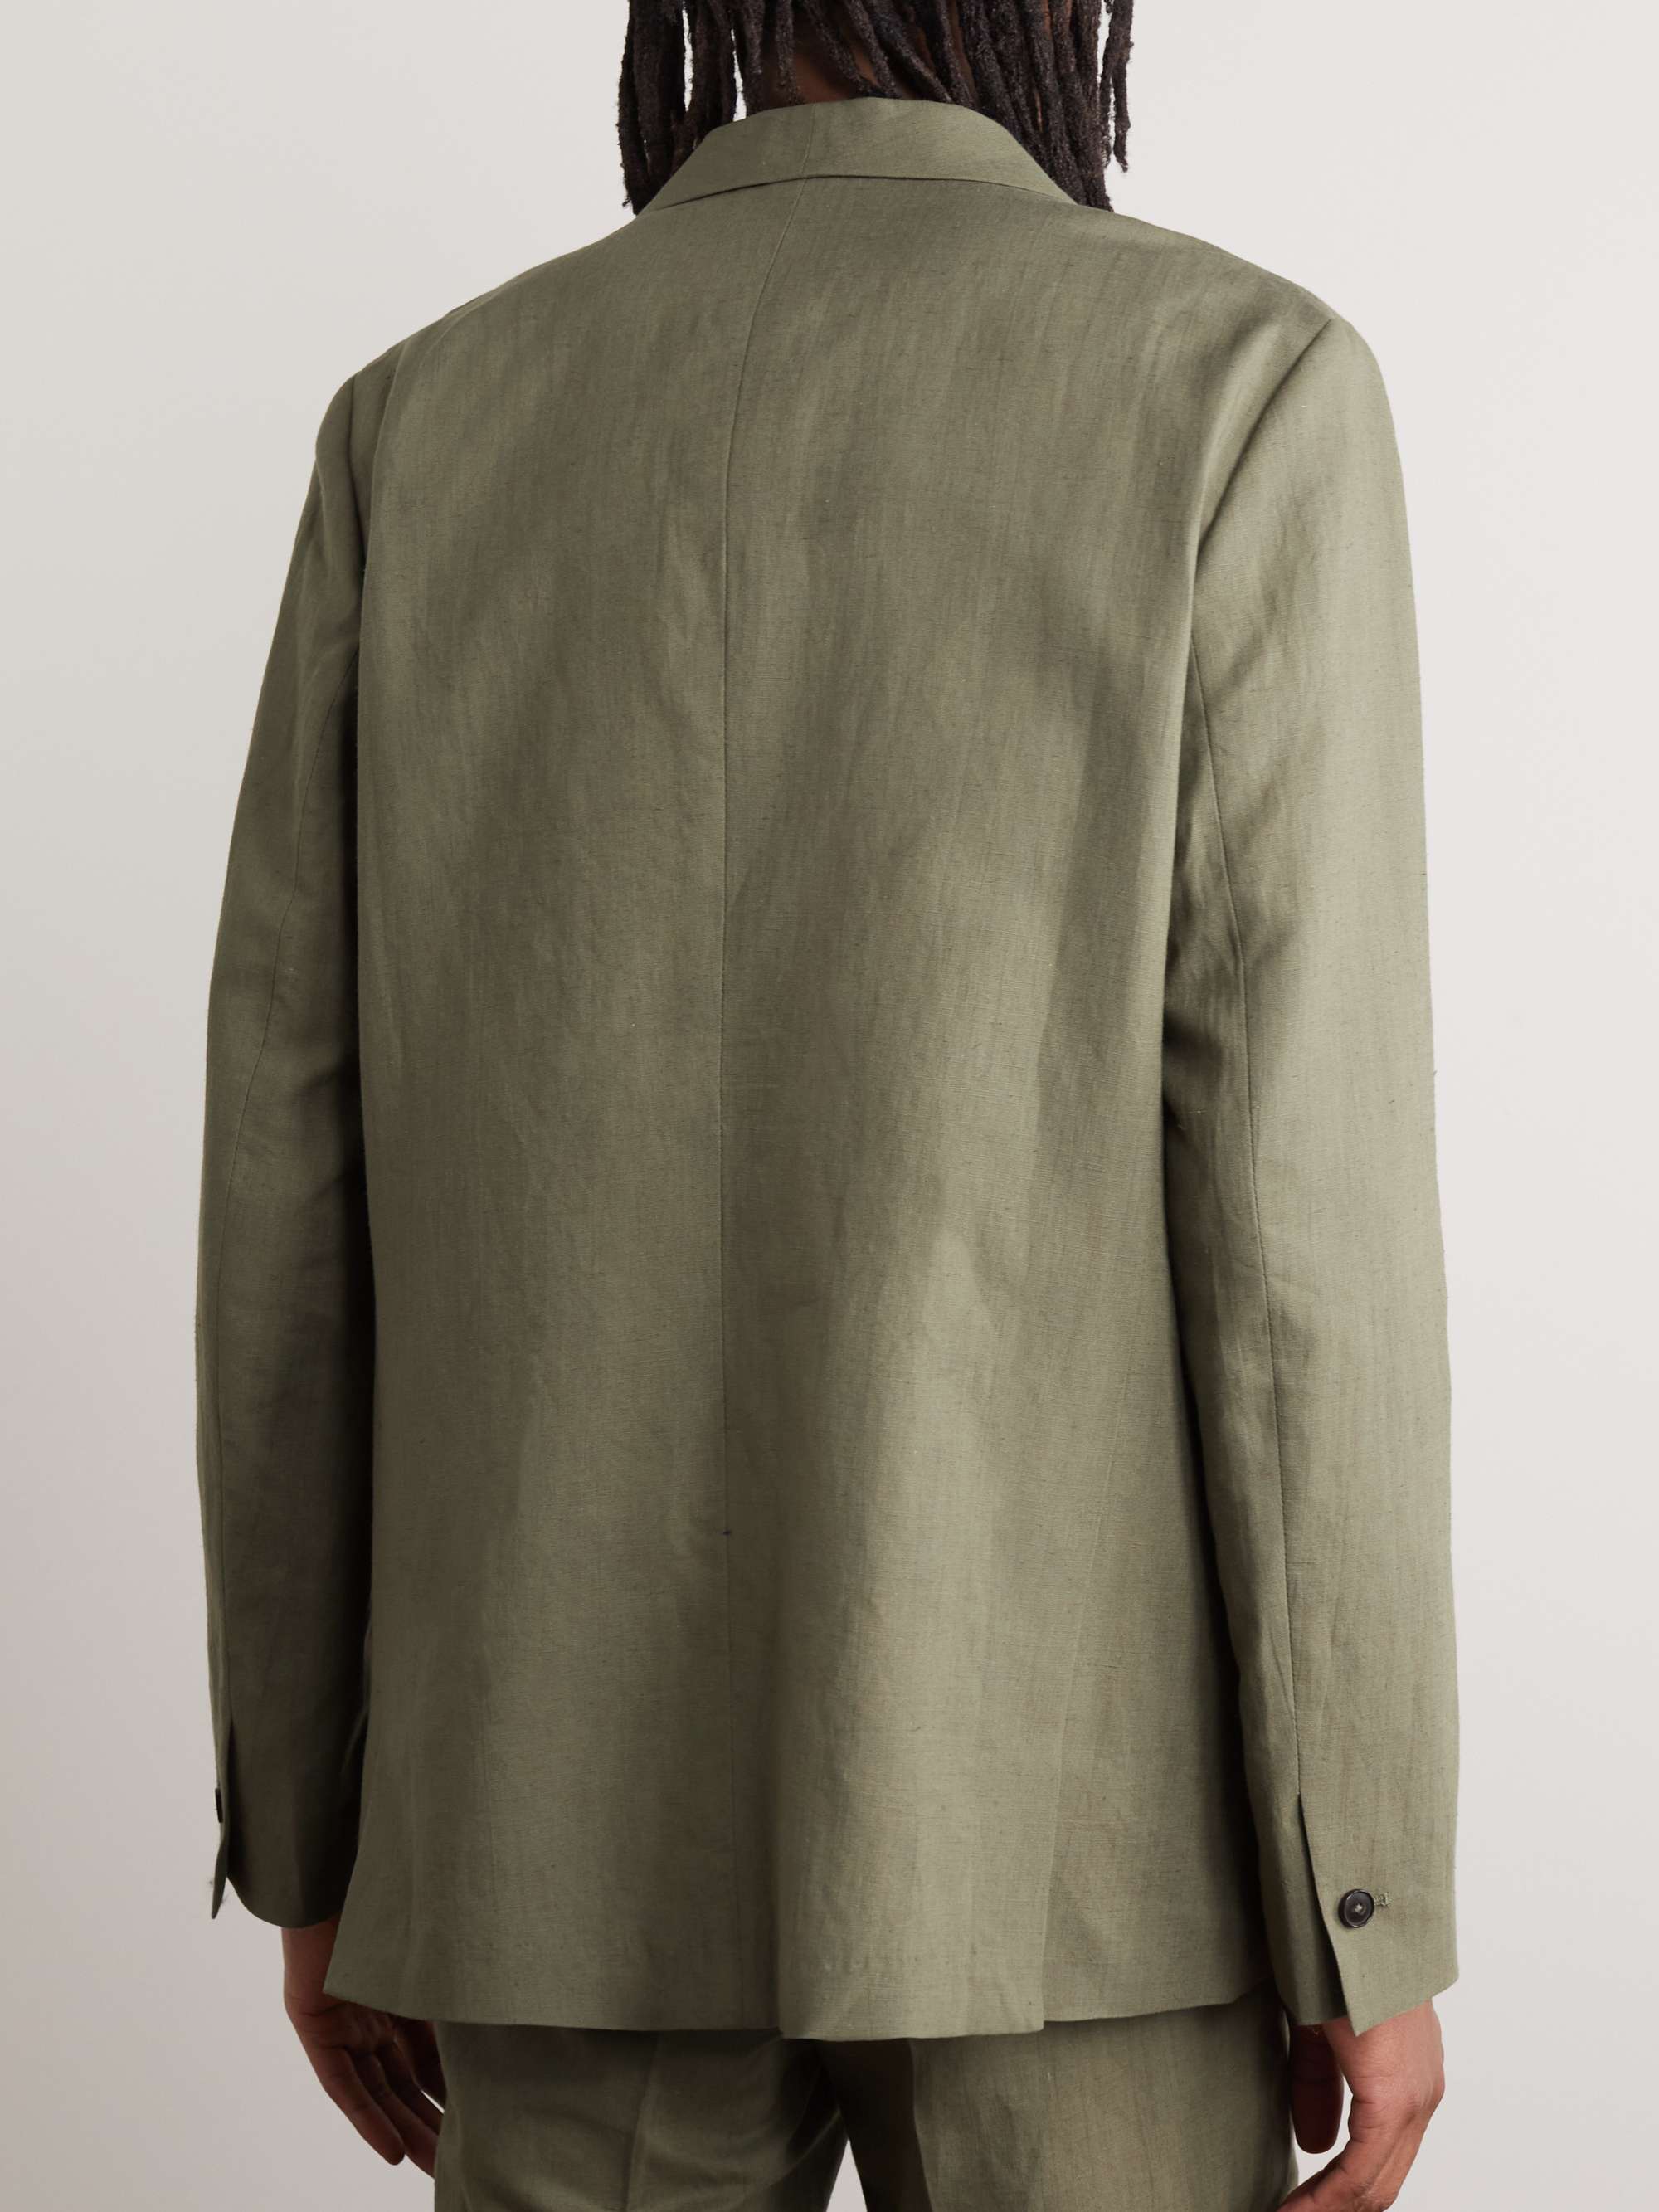 A KIND OF GUISE Shinji Cotton and Linen-Blend Blazer